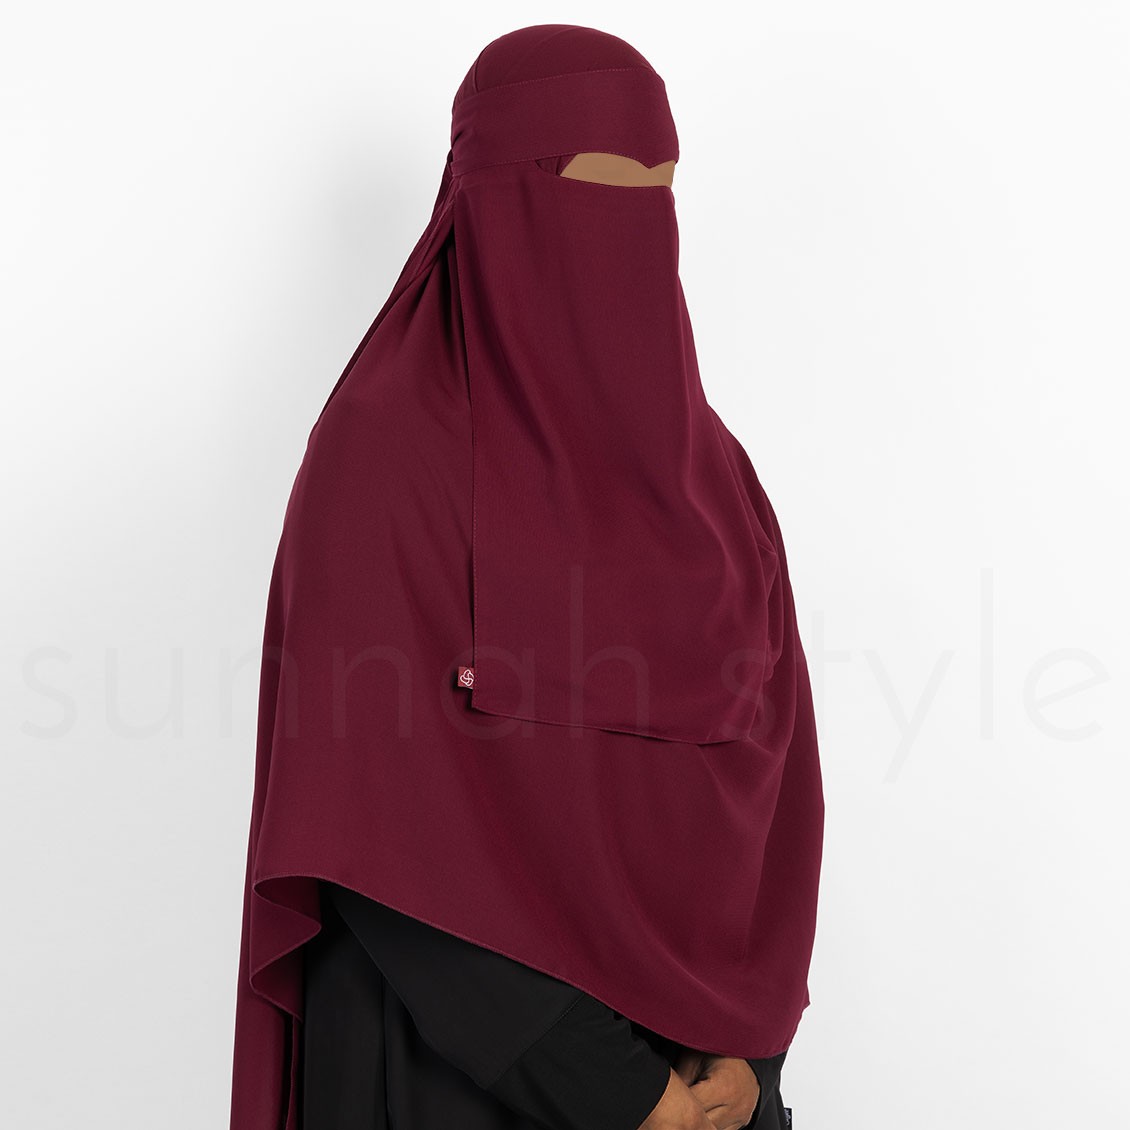 Sunnah Style One Layer Widows Peak Niqab Burgundy